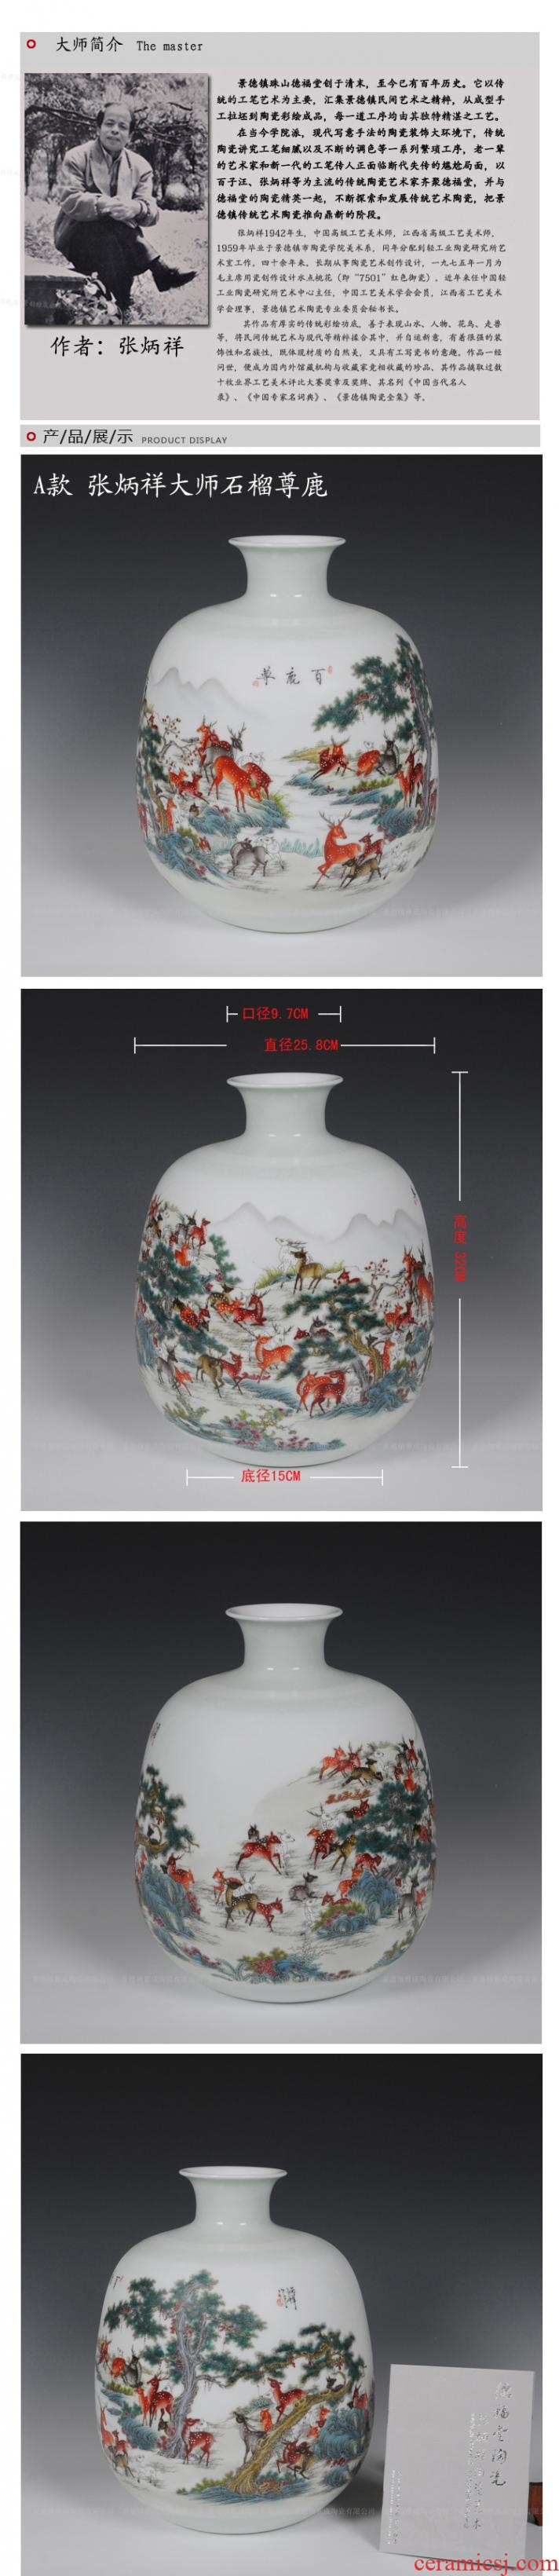 Jingdezhen famille rose porcelain Zhang Bingxiang celebrity works pomegranate honour the deer modern antique vase handicraft